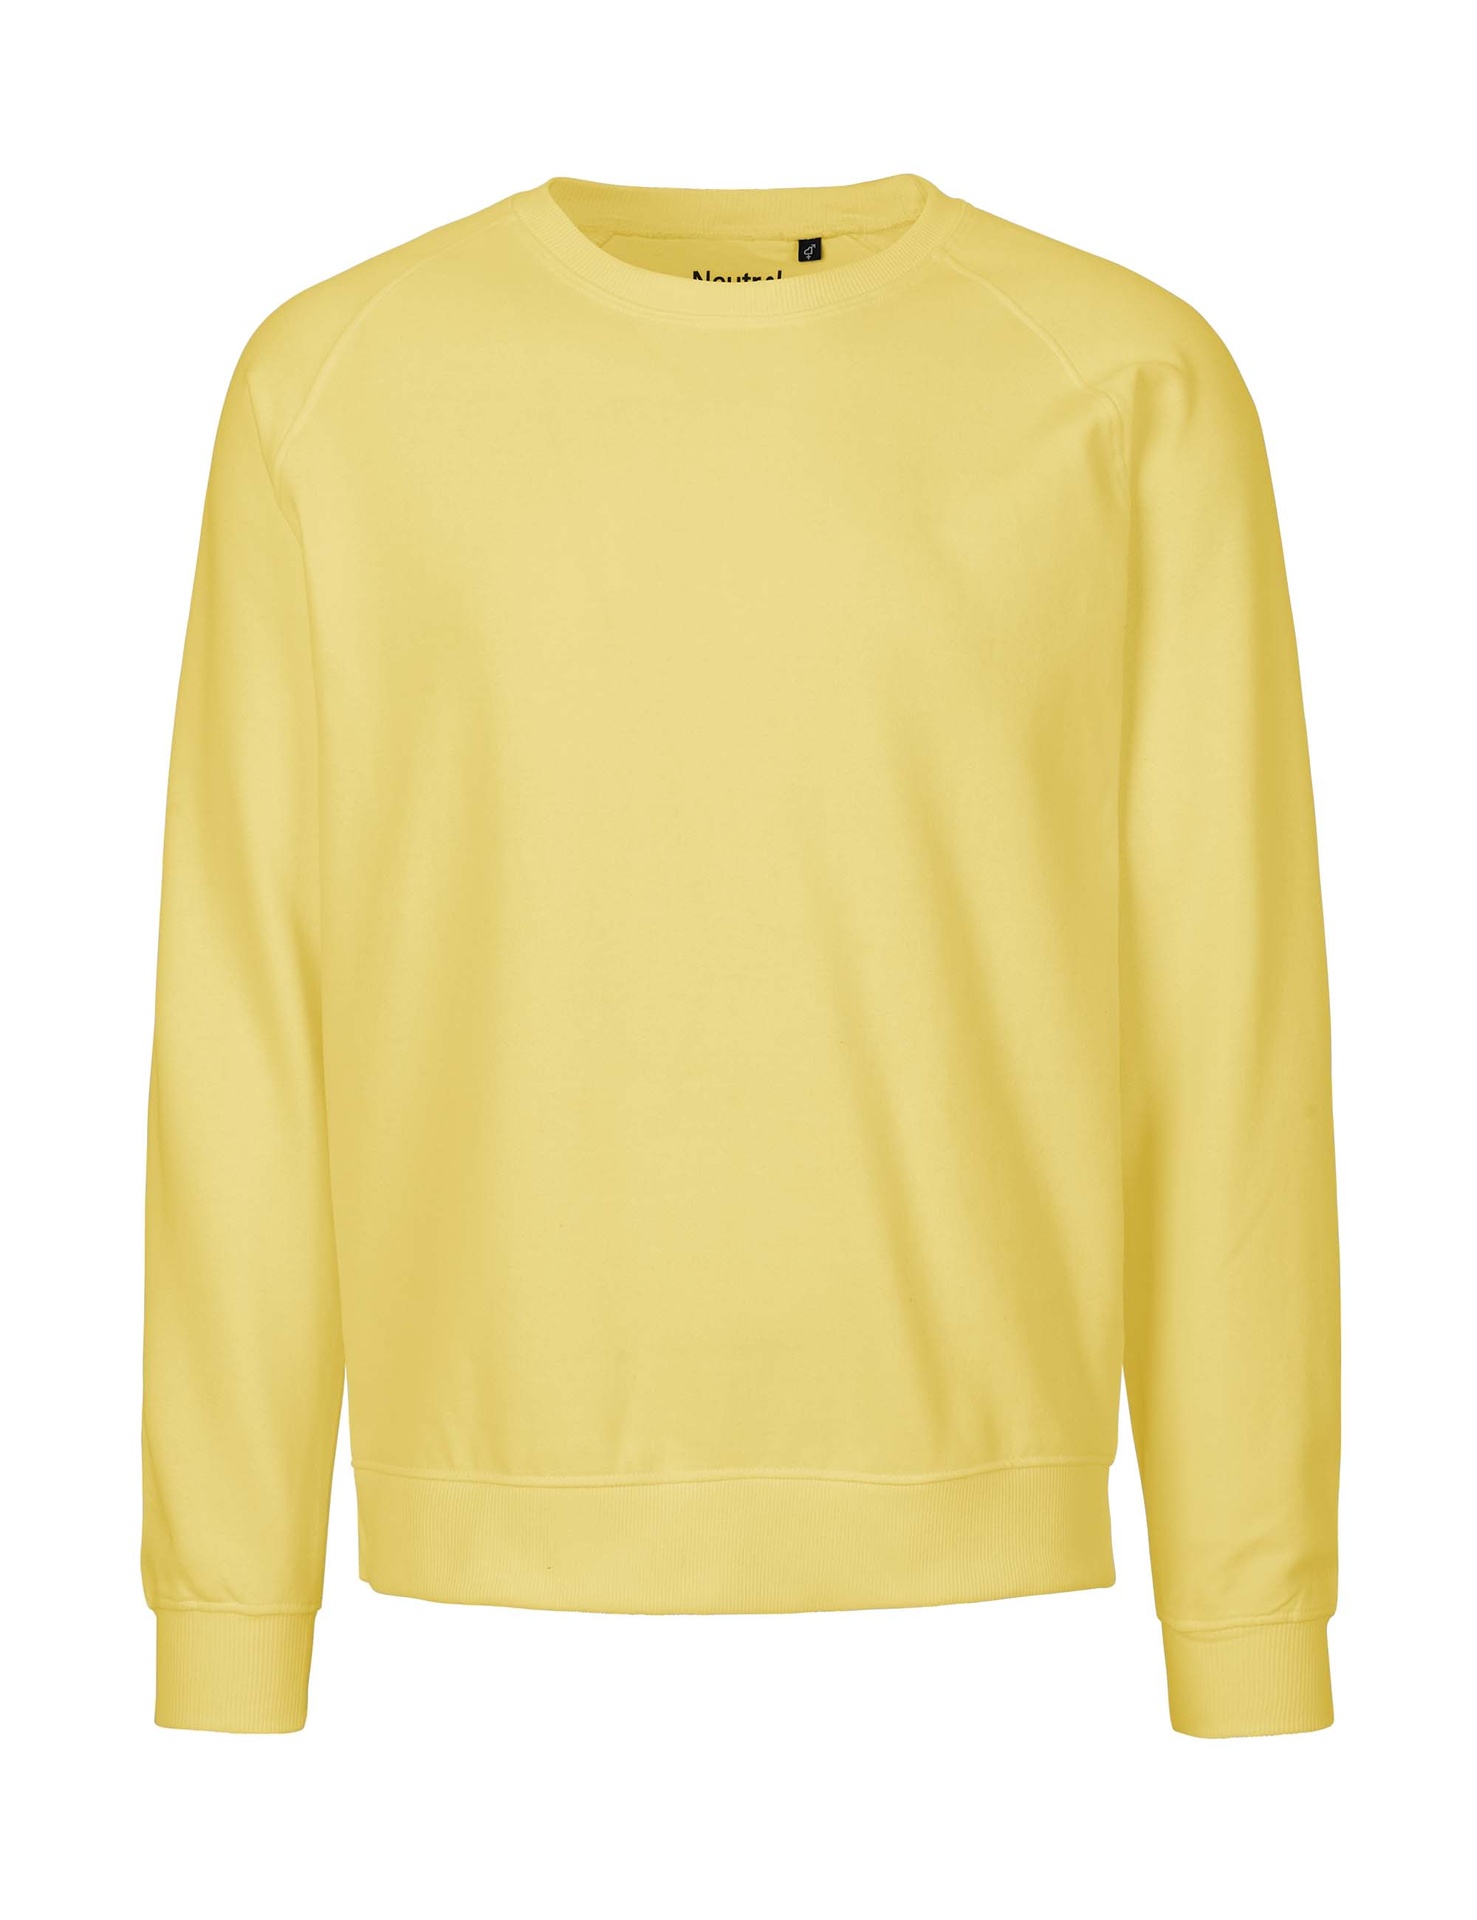 [PR/02850] Unisex Sweatshirt (Dusty Yellow 43, XS)